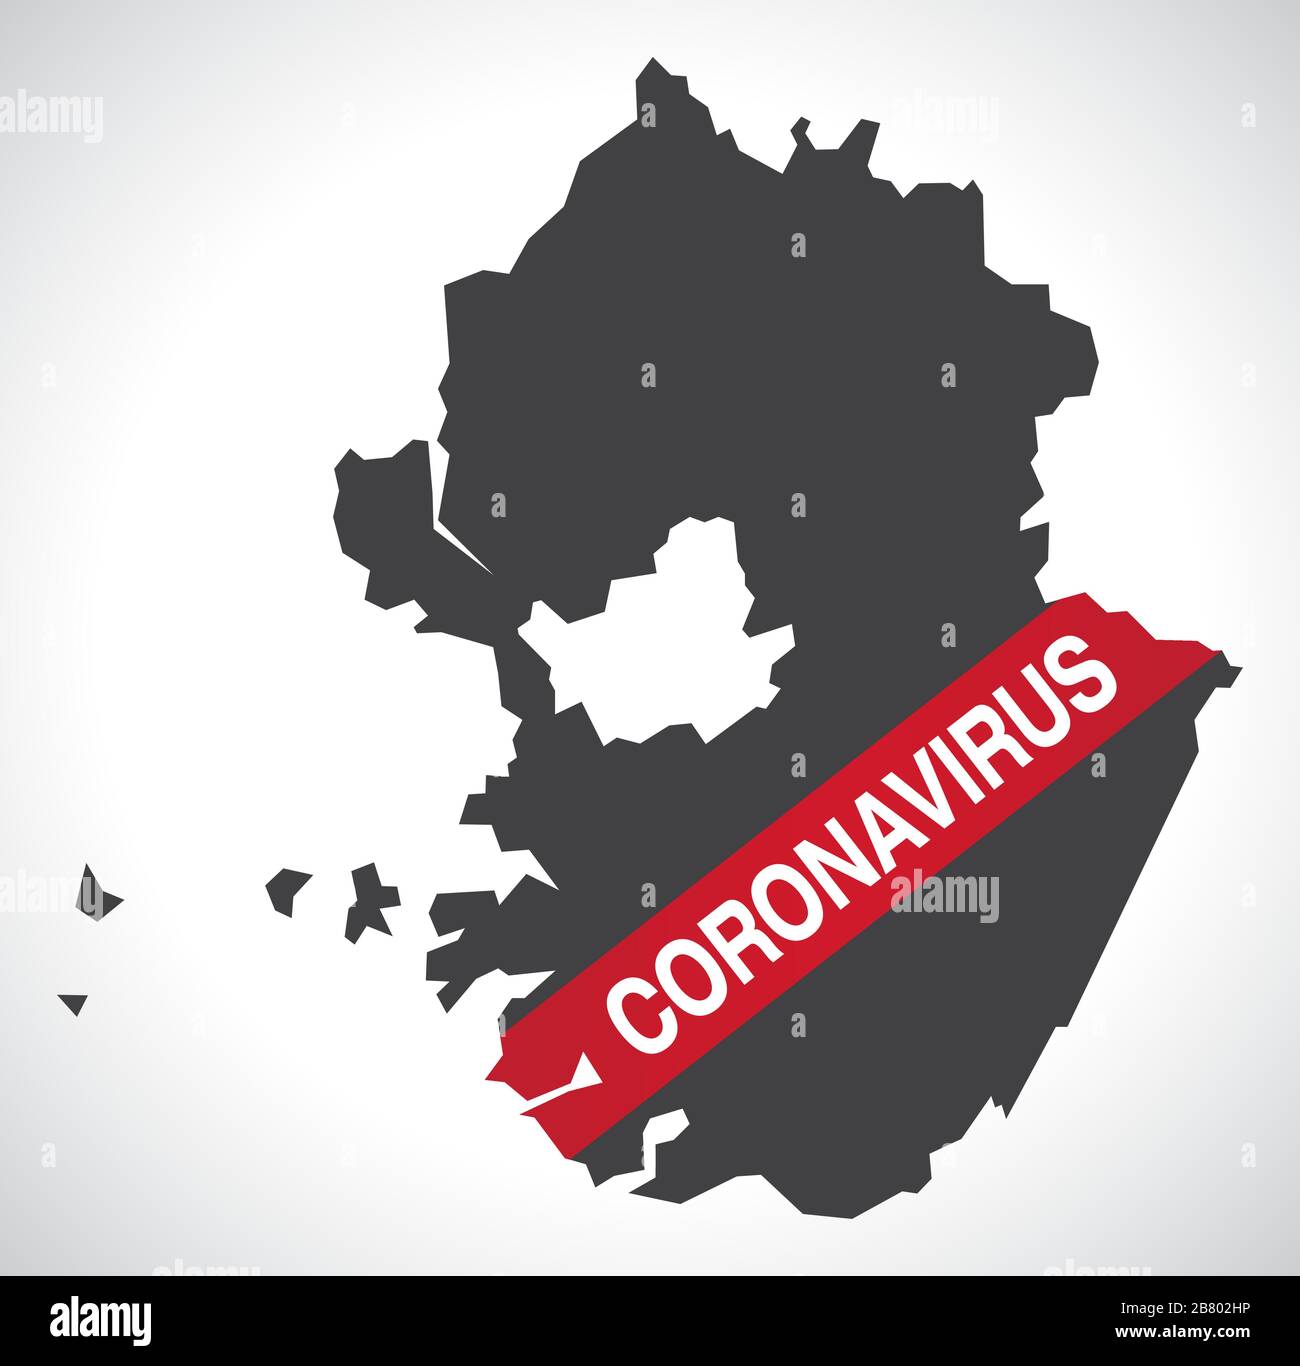 Gyeonggi SOUTH KOREA province map with Coronavirus warning illustration Stock Vector